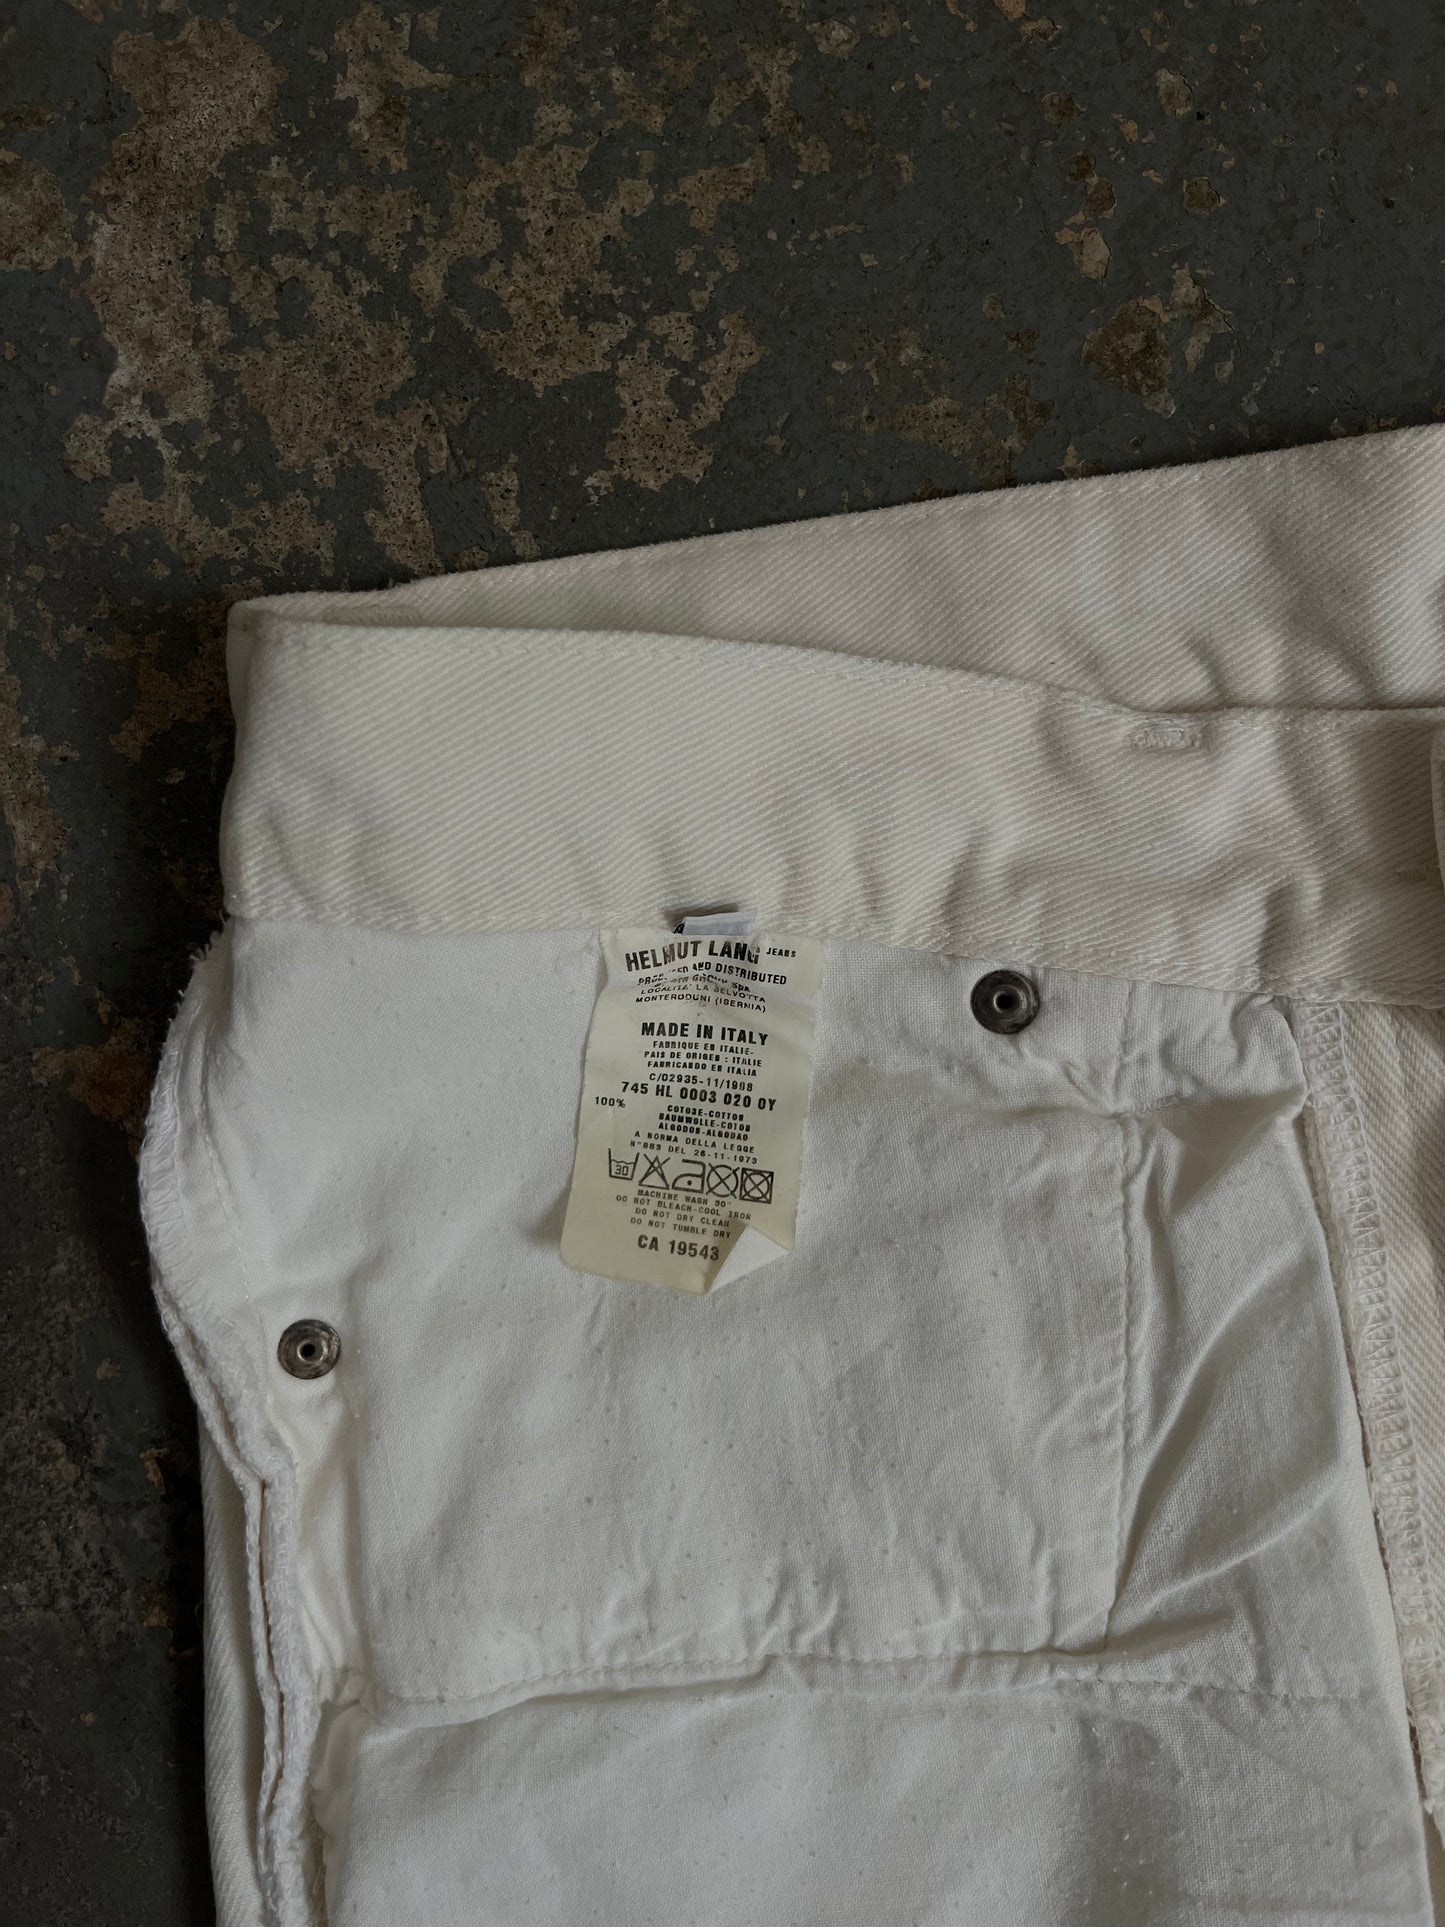 Helmut Lang SS98 White Painter Jeans